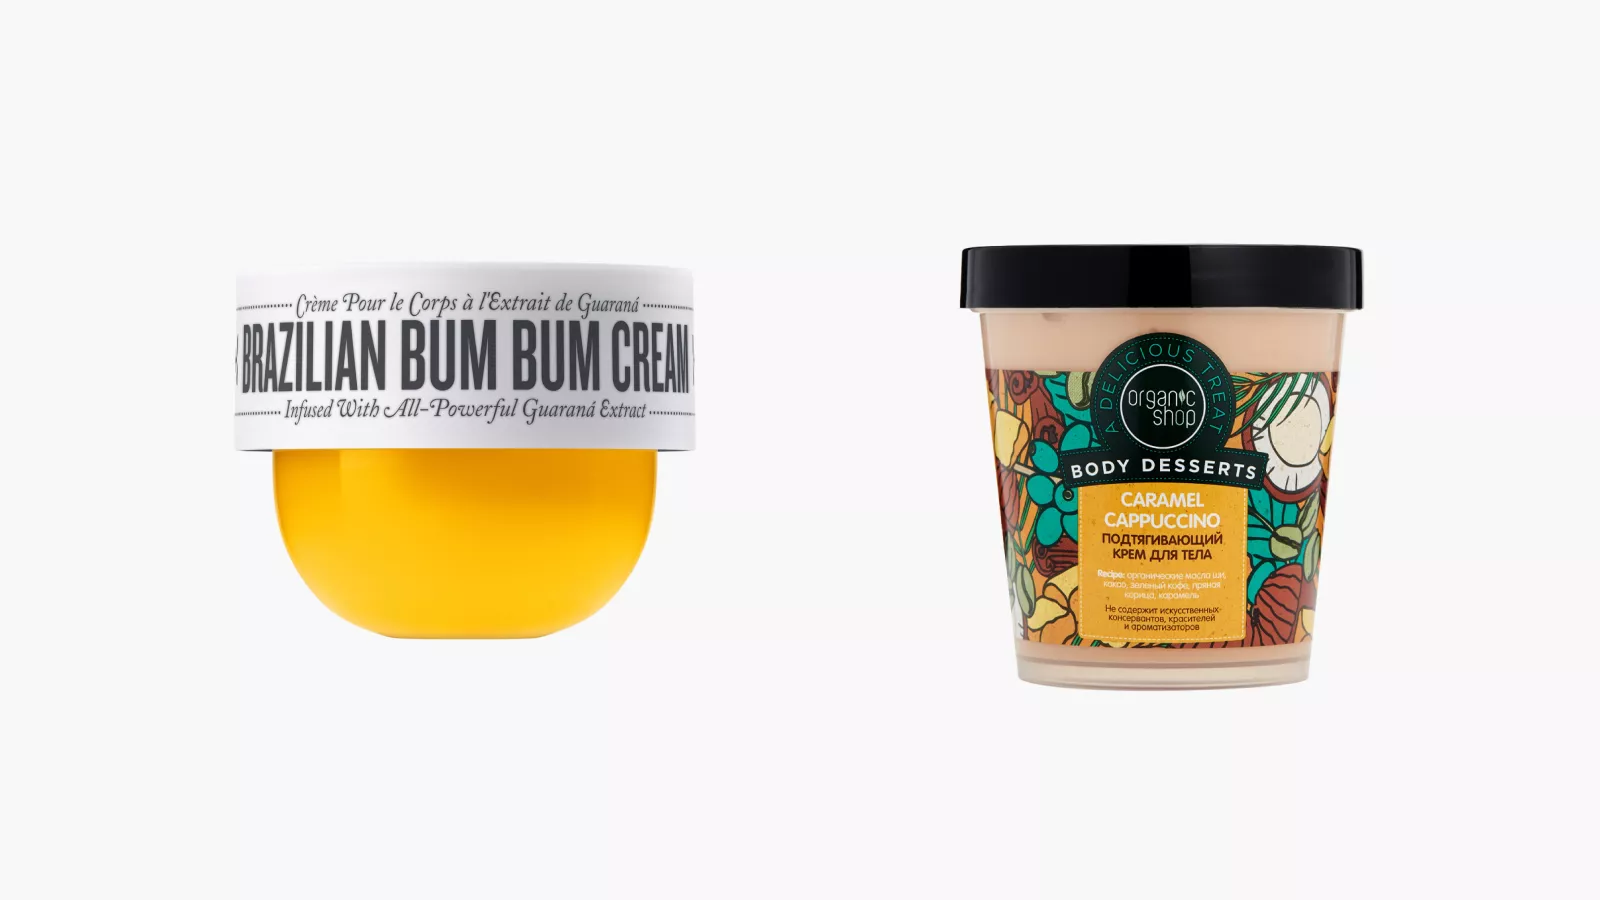 <p>Слева: увлажняющий и подтягивающий крем для тела Brazilian Bum Bum Cream, Sol de Janeiro</p>

<p>Справа: подтягивающий крем для тела Body Desserts, Caramel Cappuccino, Organic Shop</p>